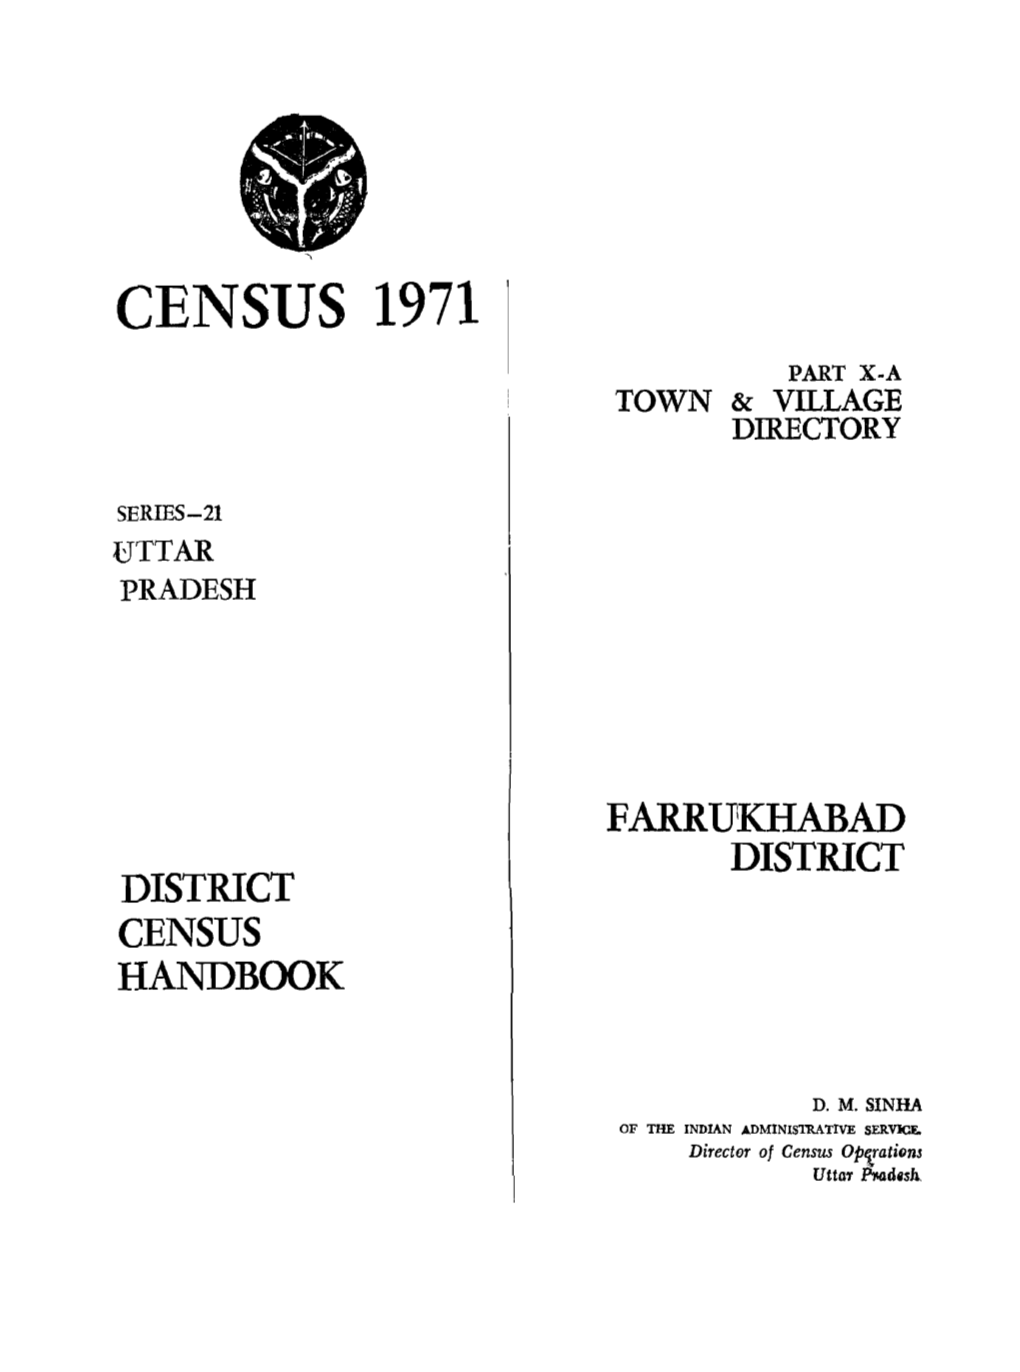 District Census Handbook, Farrukhabad, Part X-A, Series-21